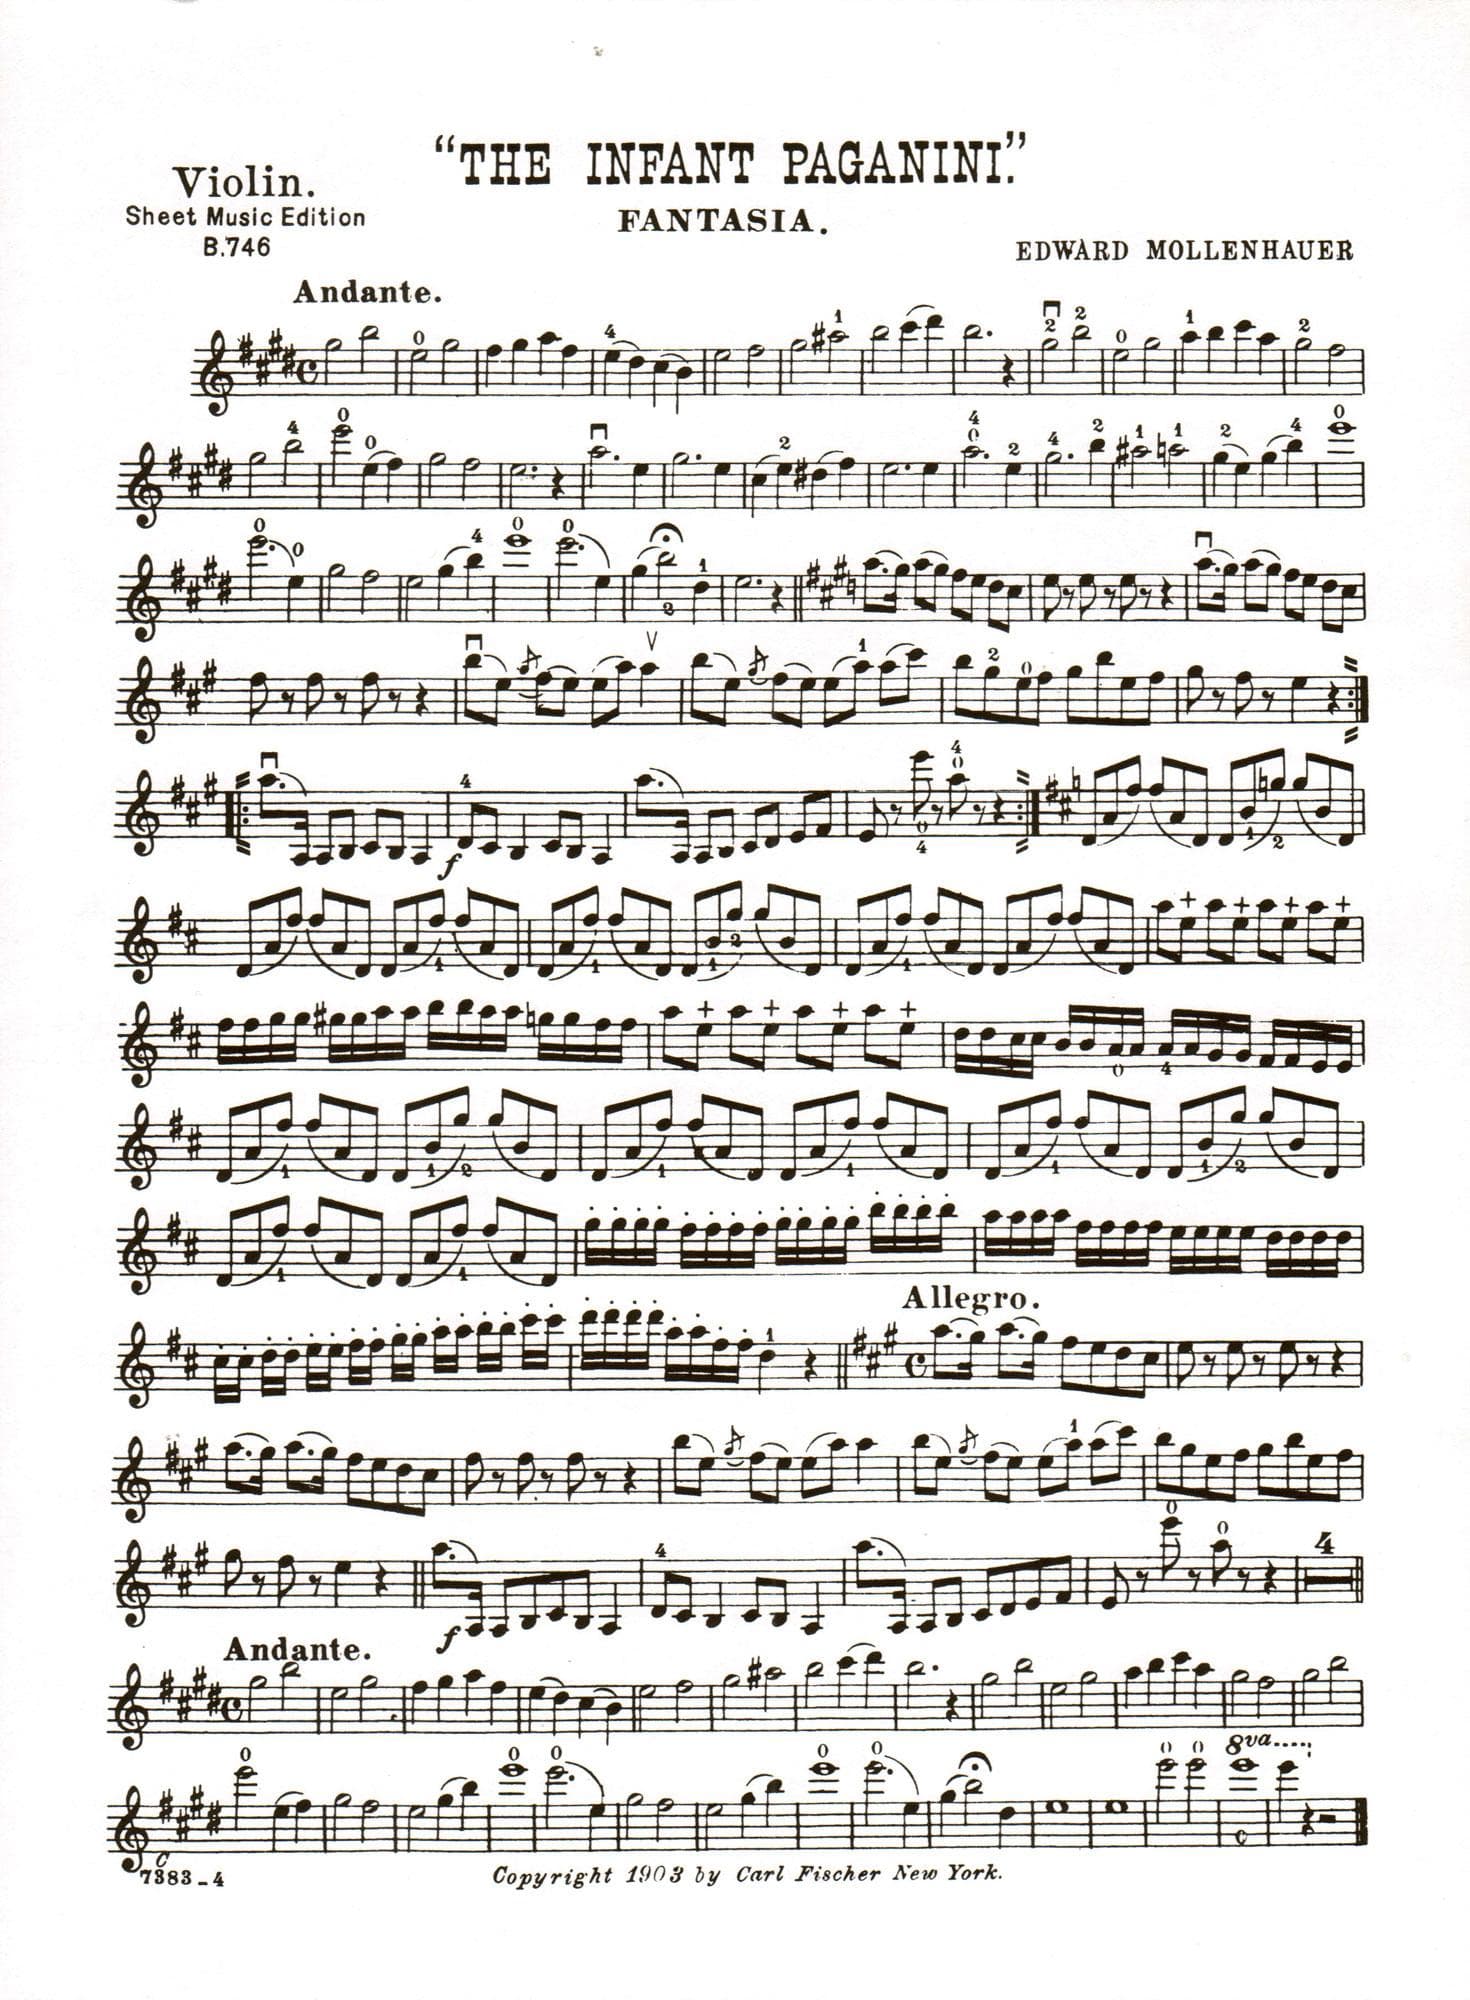 Mollenhauer, Edward - The Infant Paganini (Fantasia) - Violin and Piano - Carl Fischer Edition